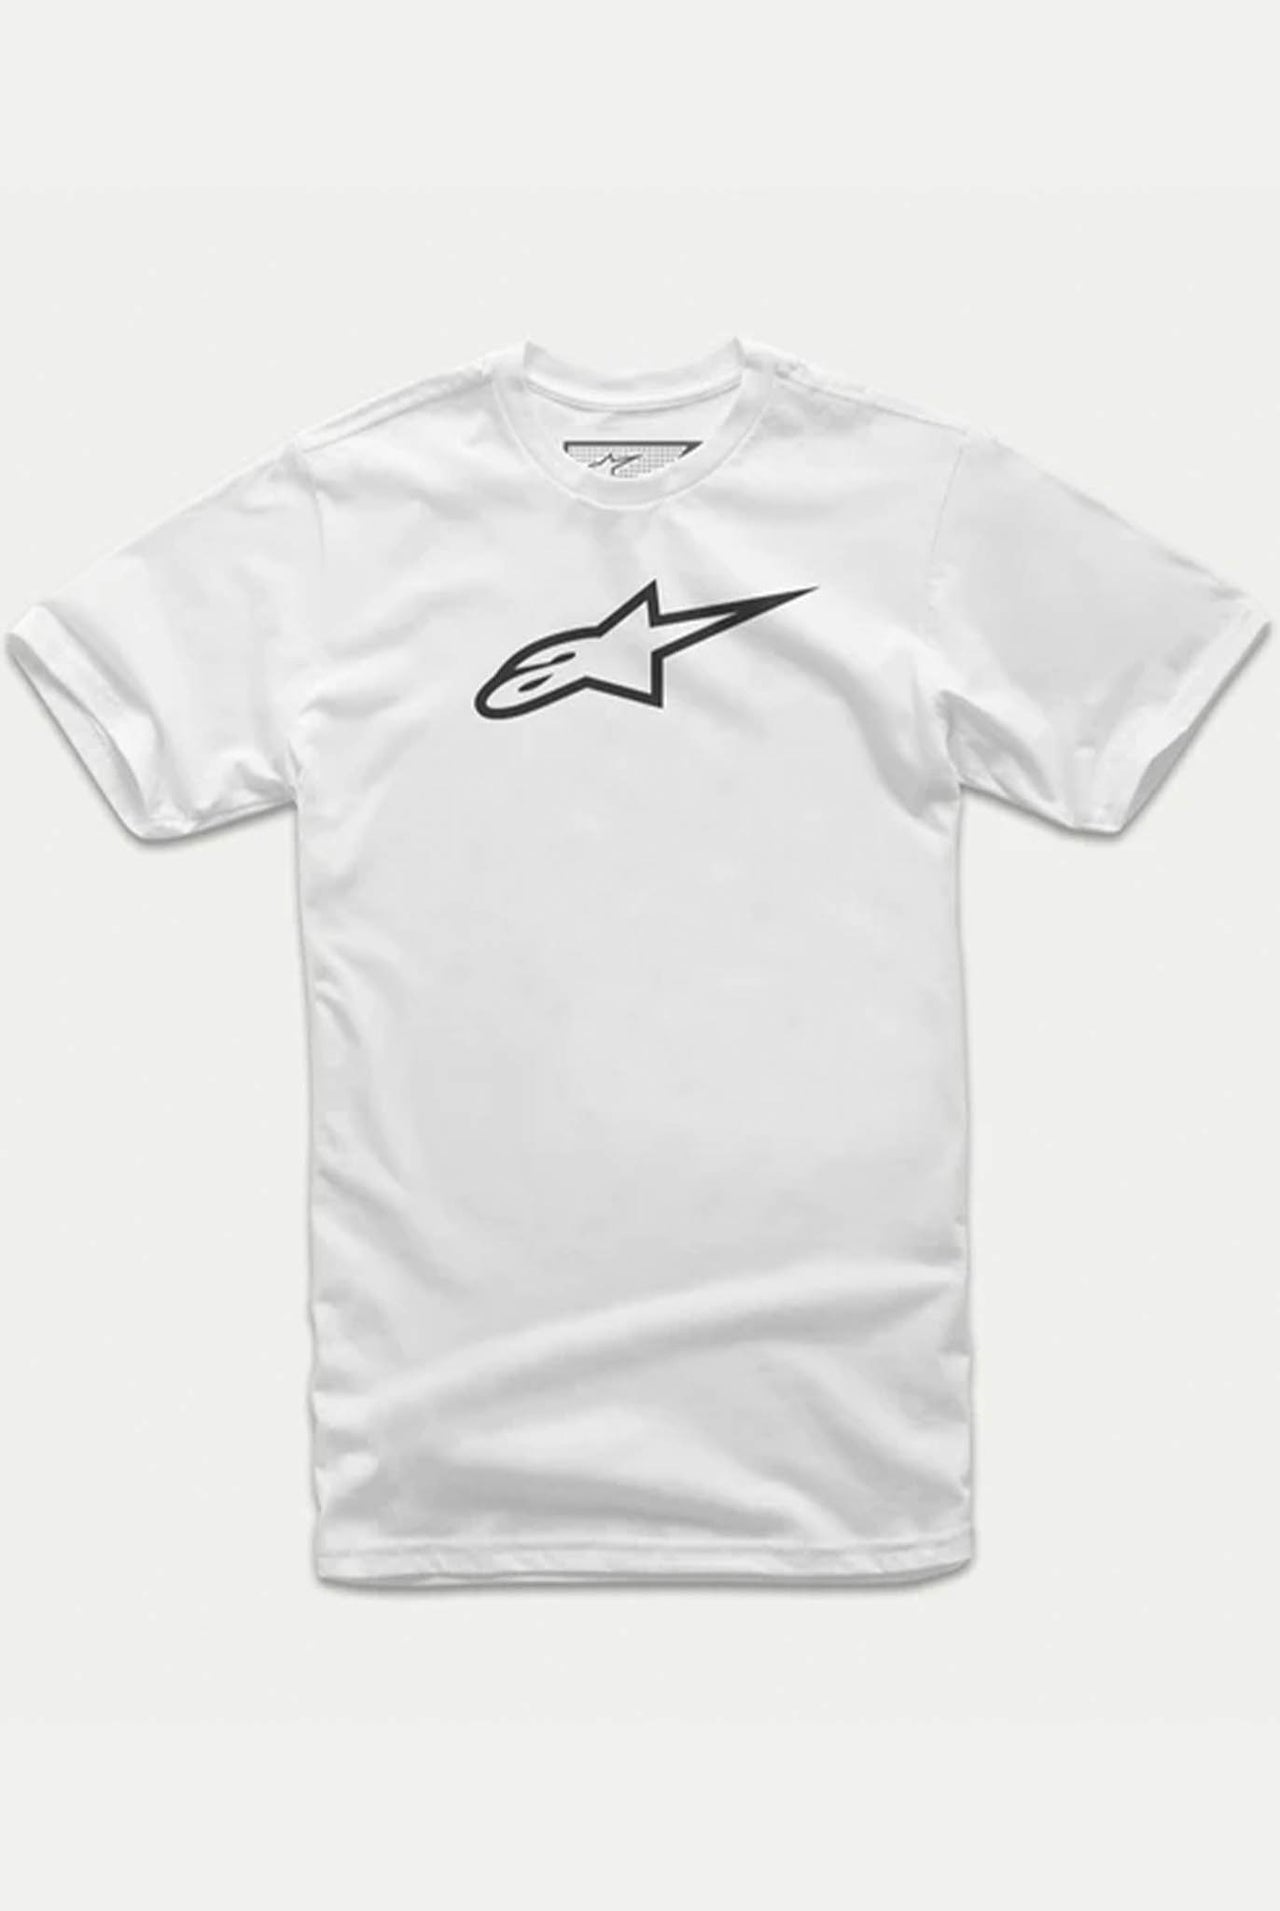 Camiseta Alpinestar  Ageless Classic Blanco/Negro